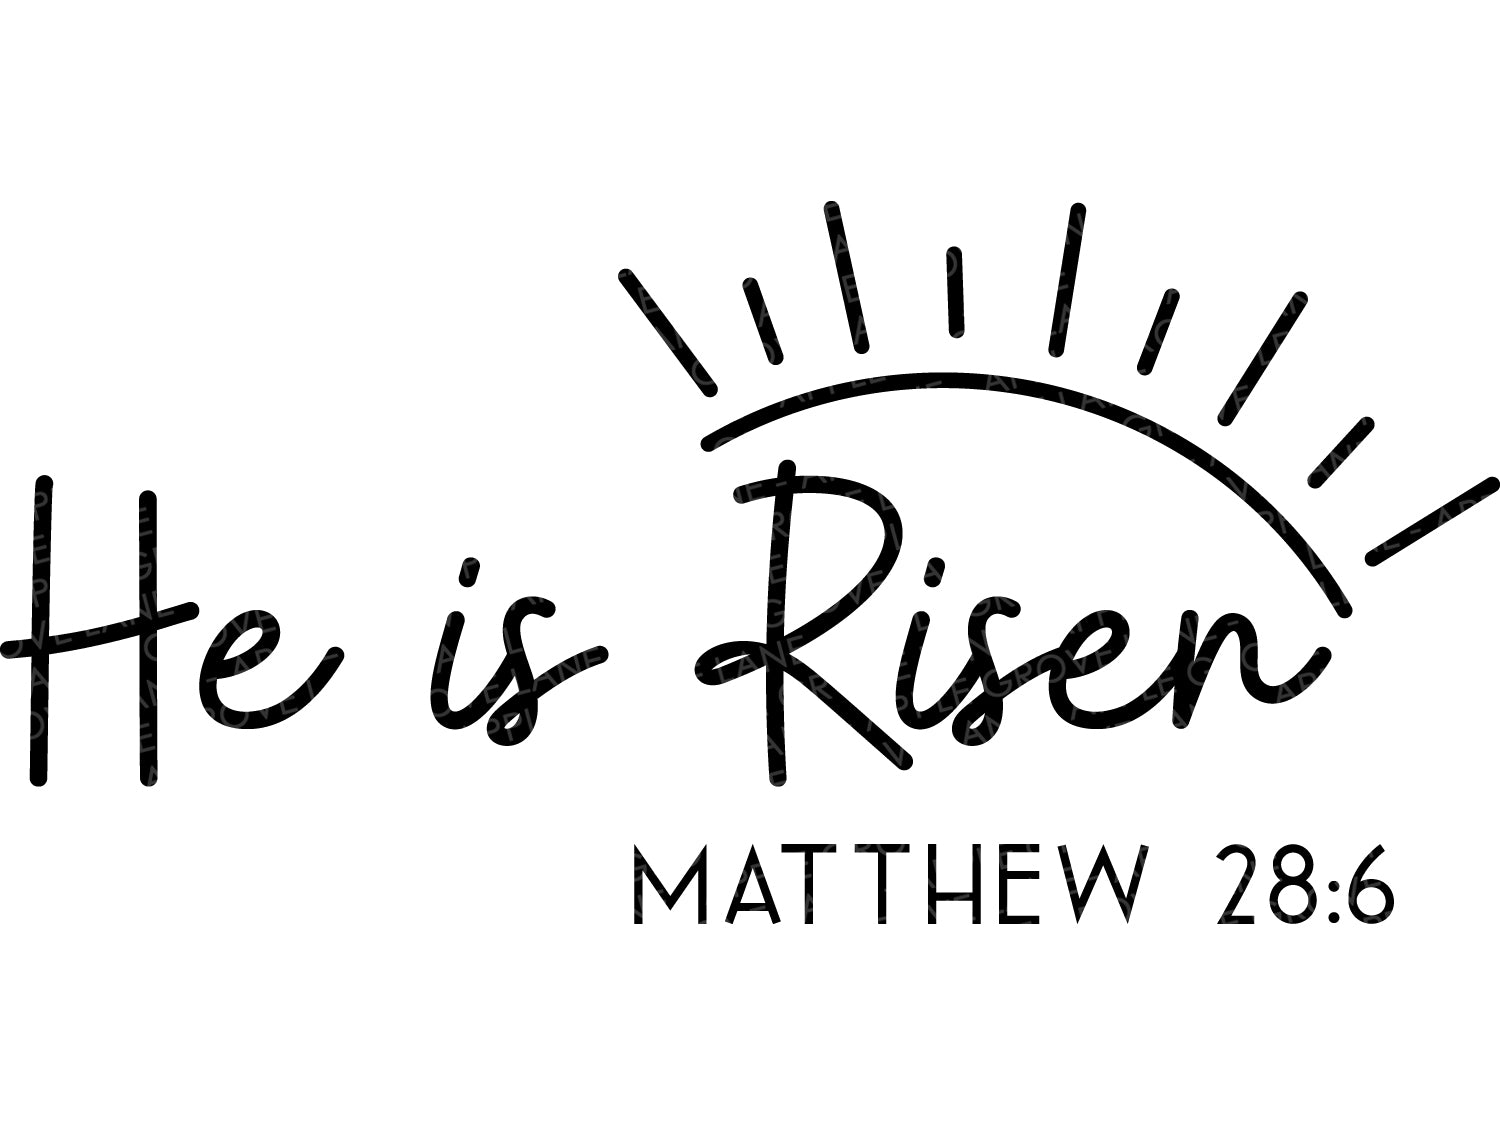 He is Risen Svg - Religious Easter Svg - Matthew 28:6 SVG - Resurrection Svg - Christian Easter Svg - Easter Svg - Jesus Svg - Christian Svg